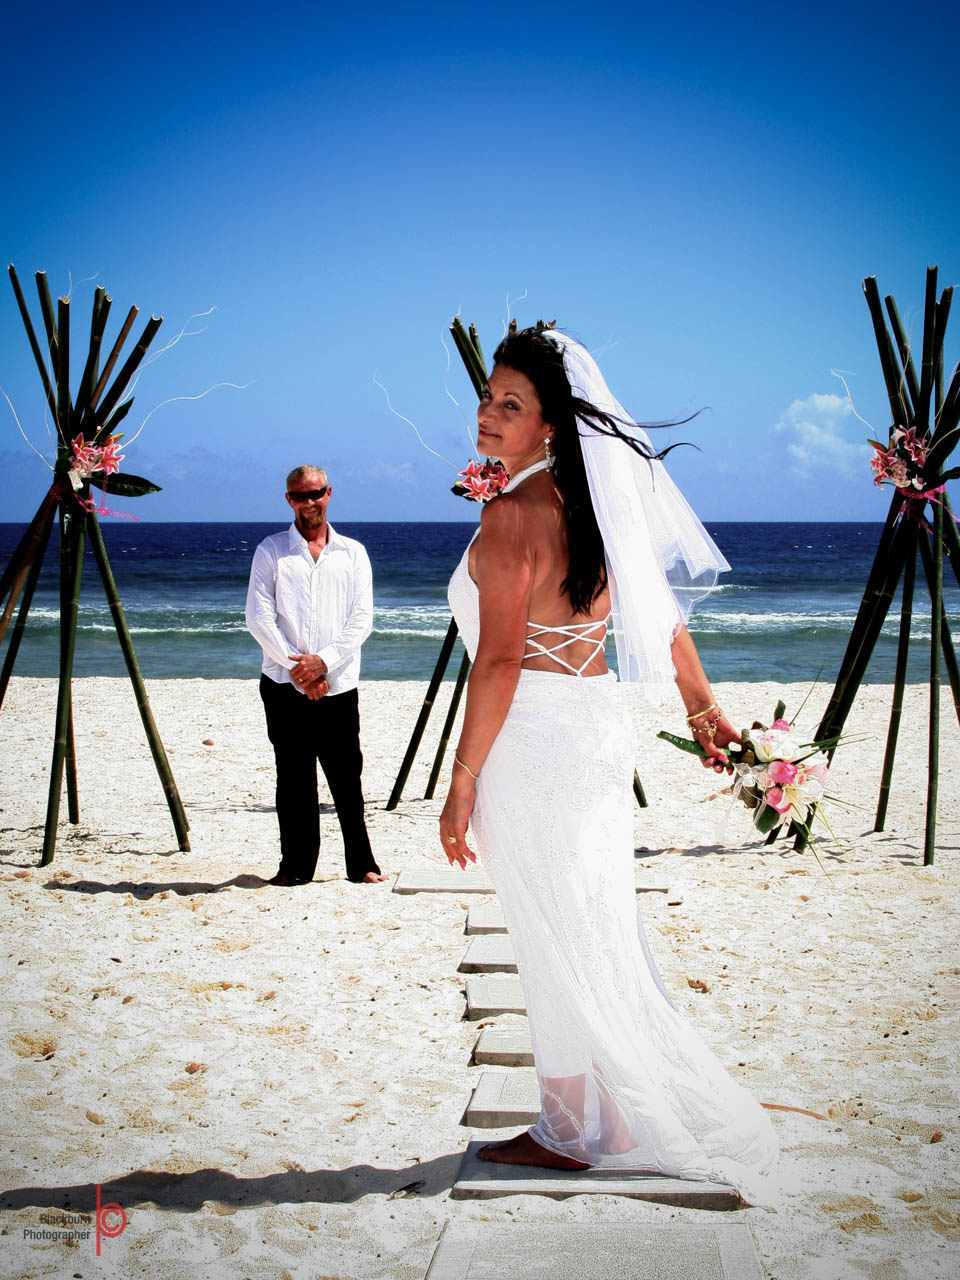 An Island Wedding 05 - Corey Blackburn Photographer - Weddings | Pregnancy | Newborn | Portrait | Fine Art | Commercial | Journalism